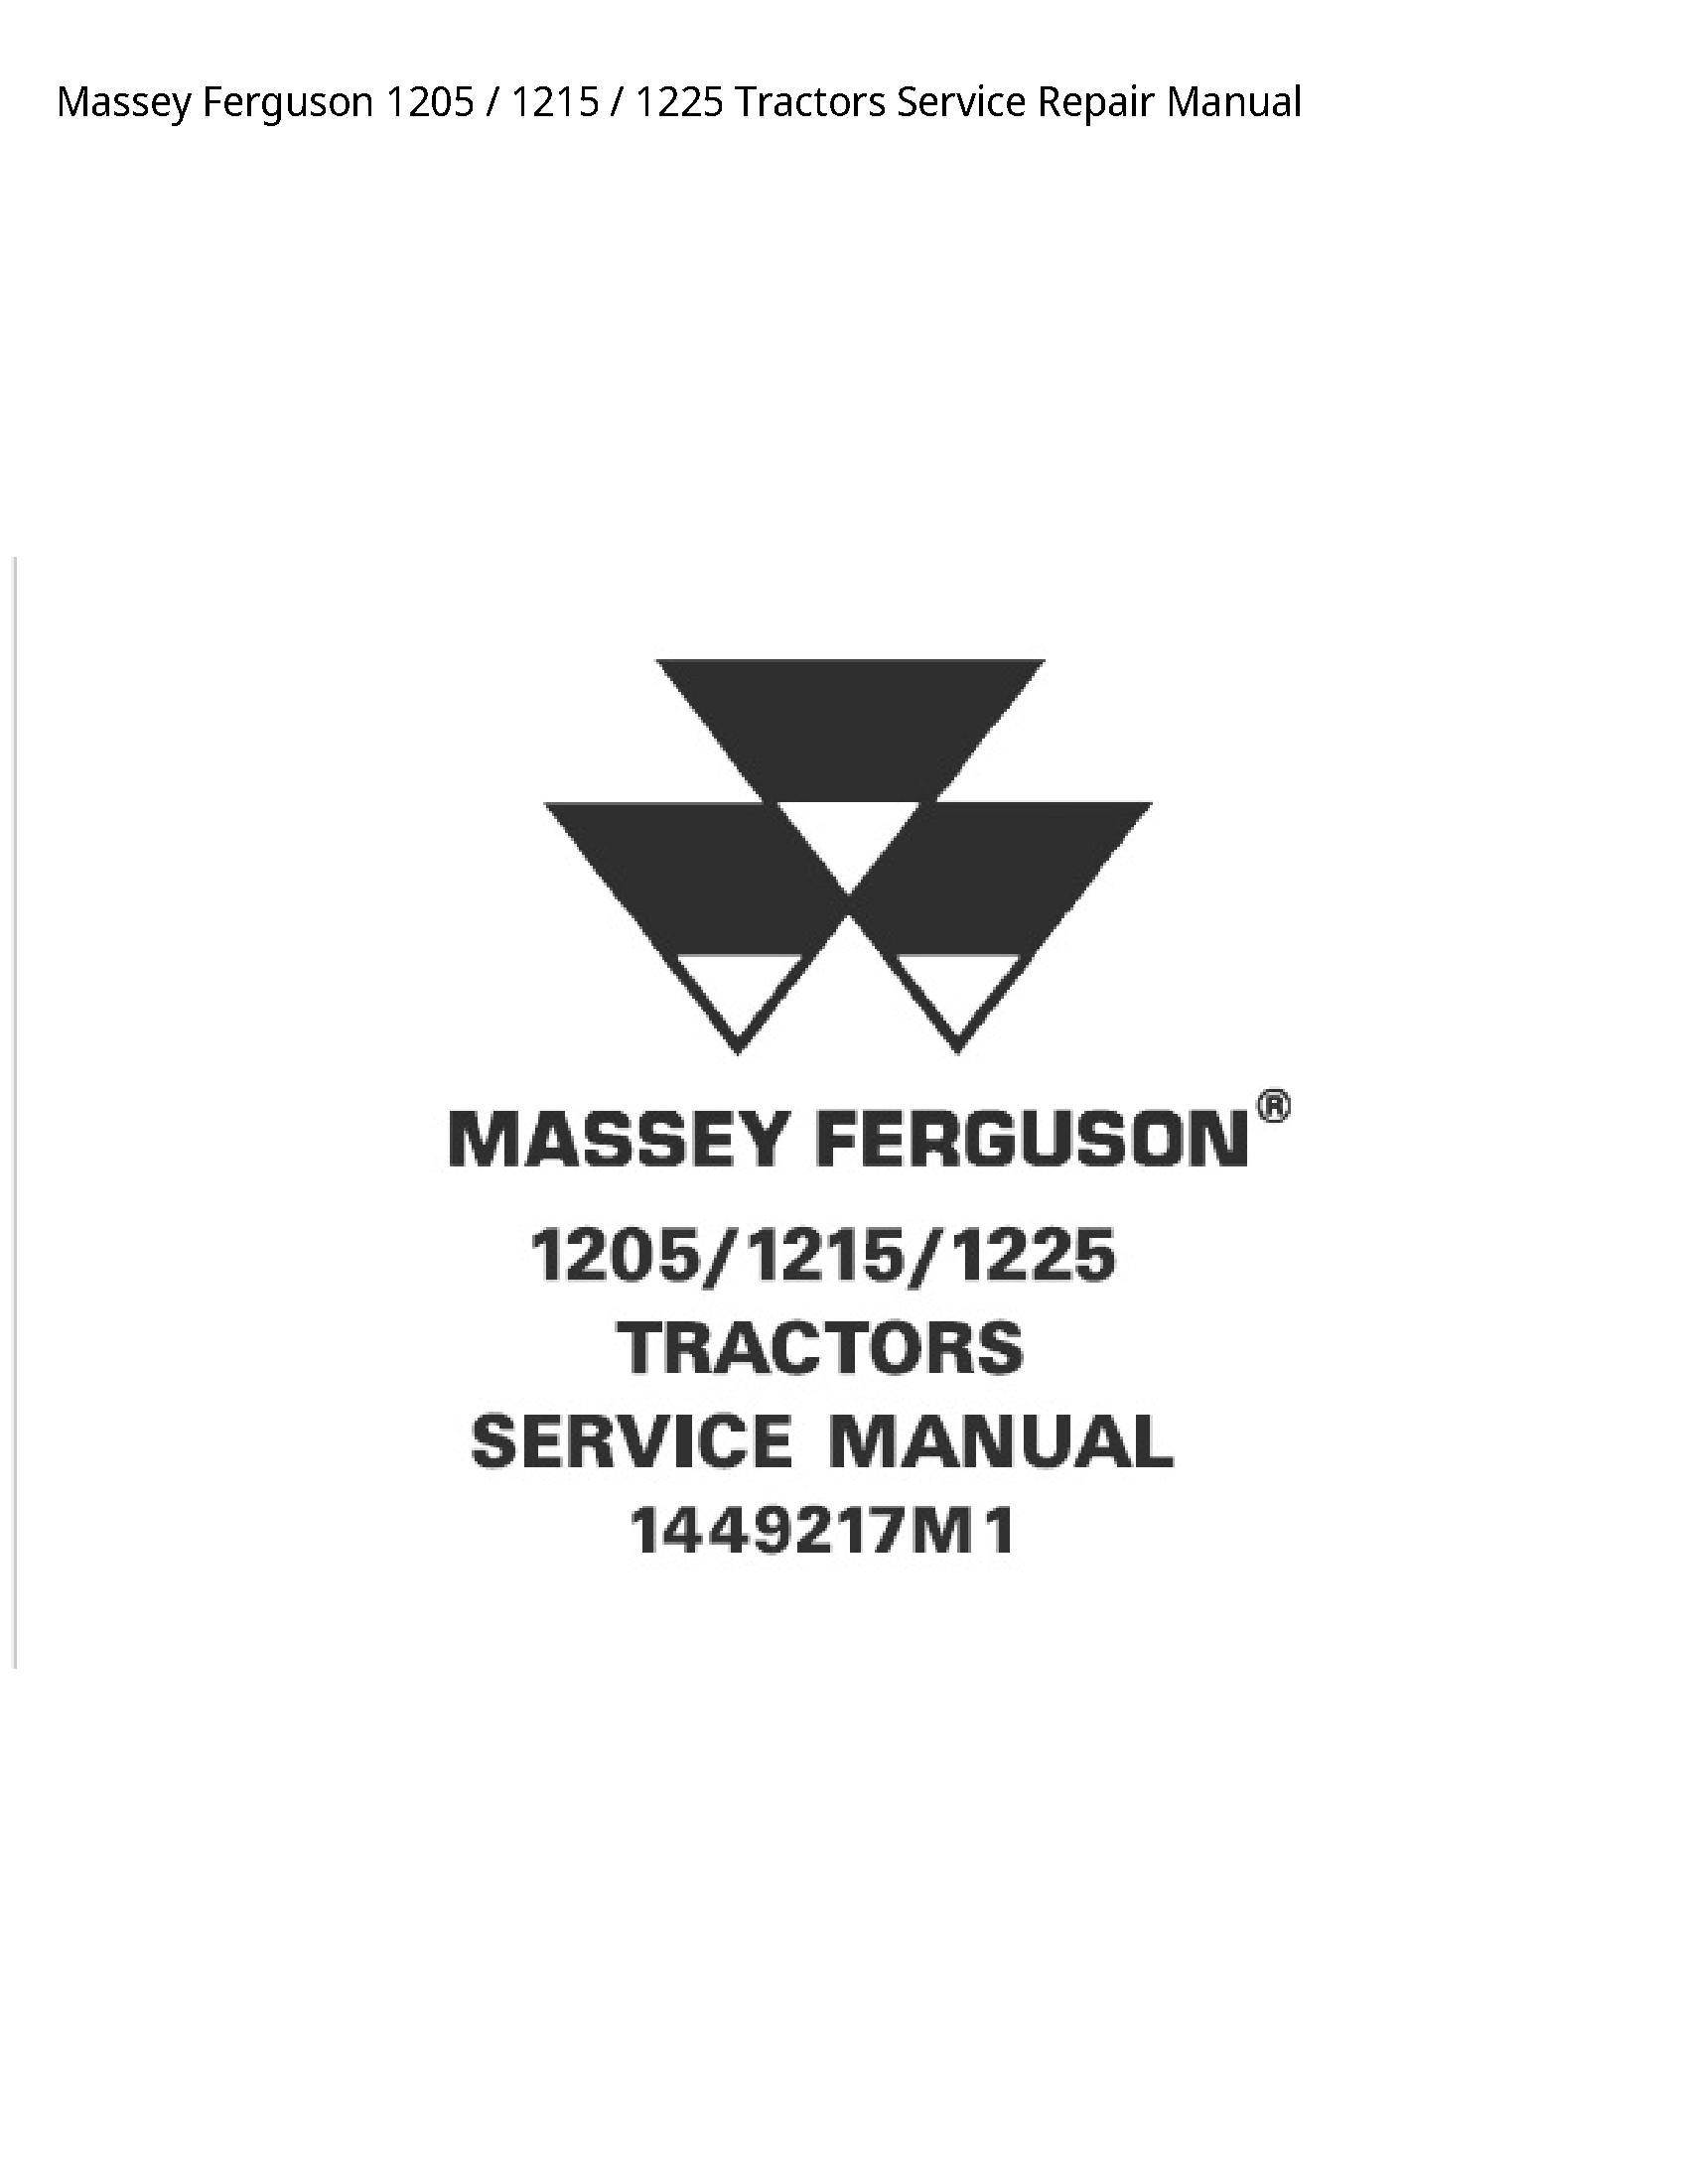 Massey Ferguson 1205 Tractors manual